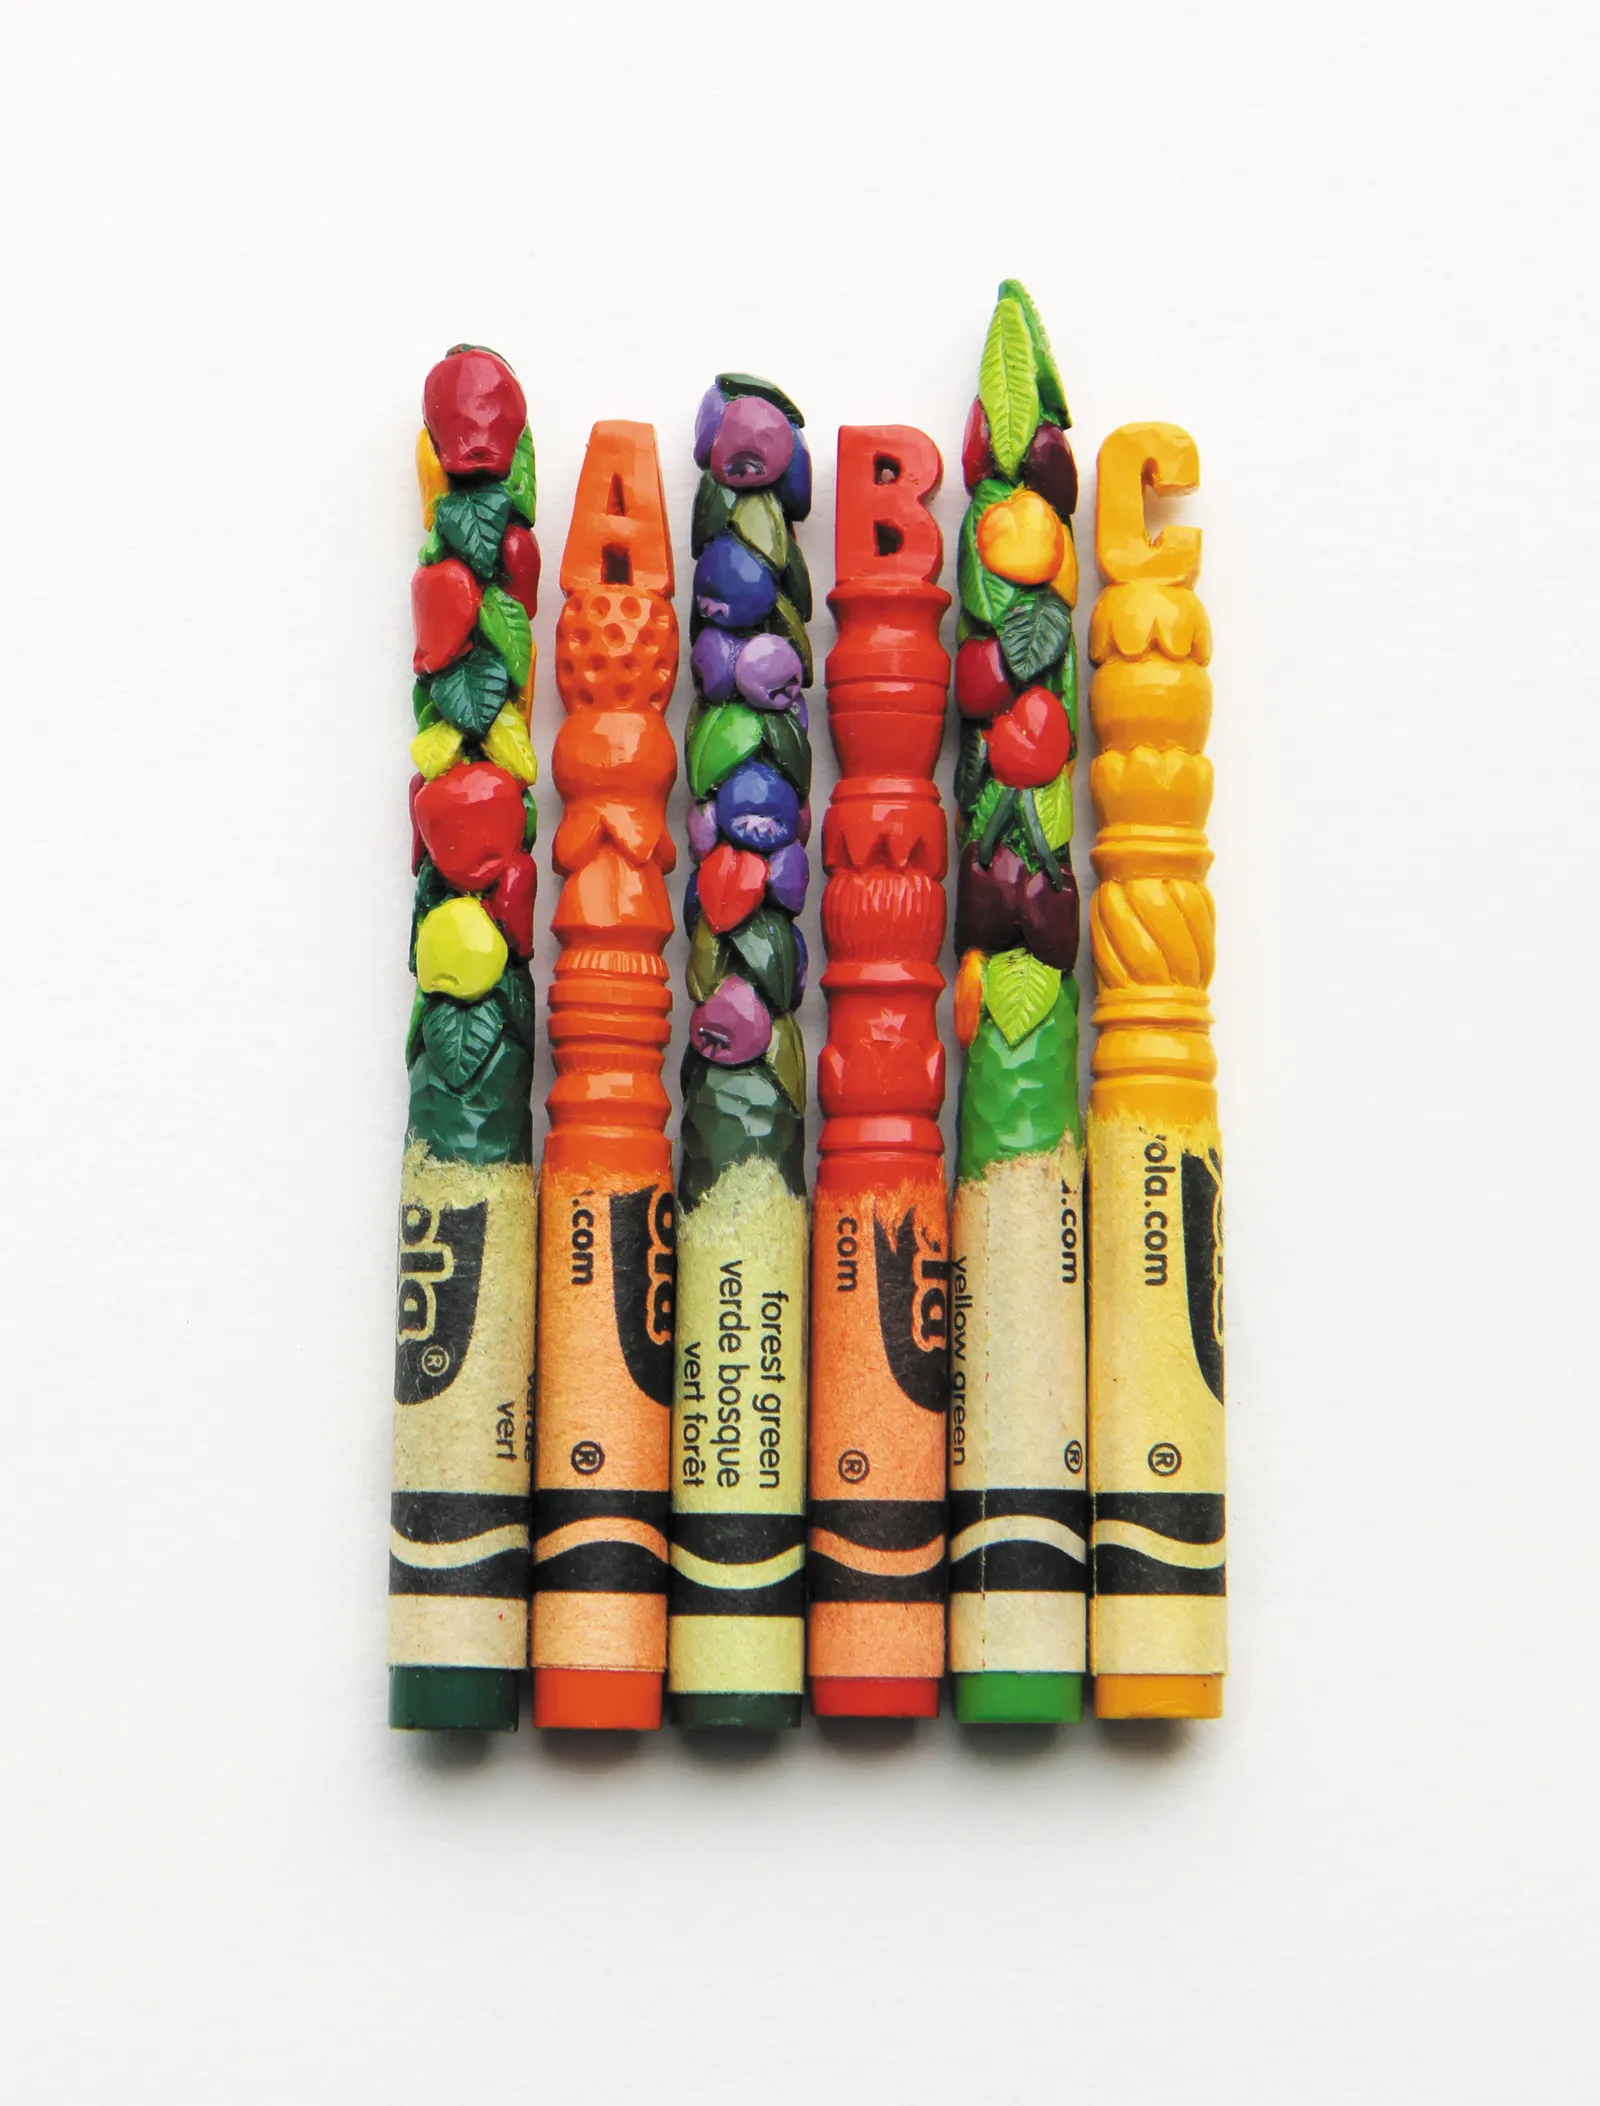 Beginner Bundle  The Crayon Case